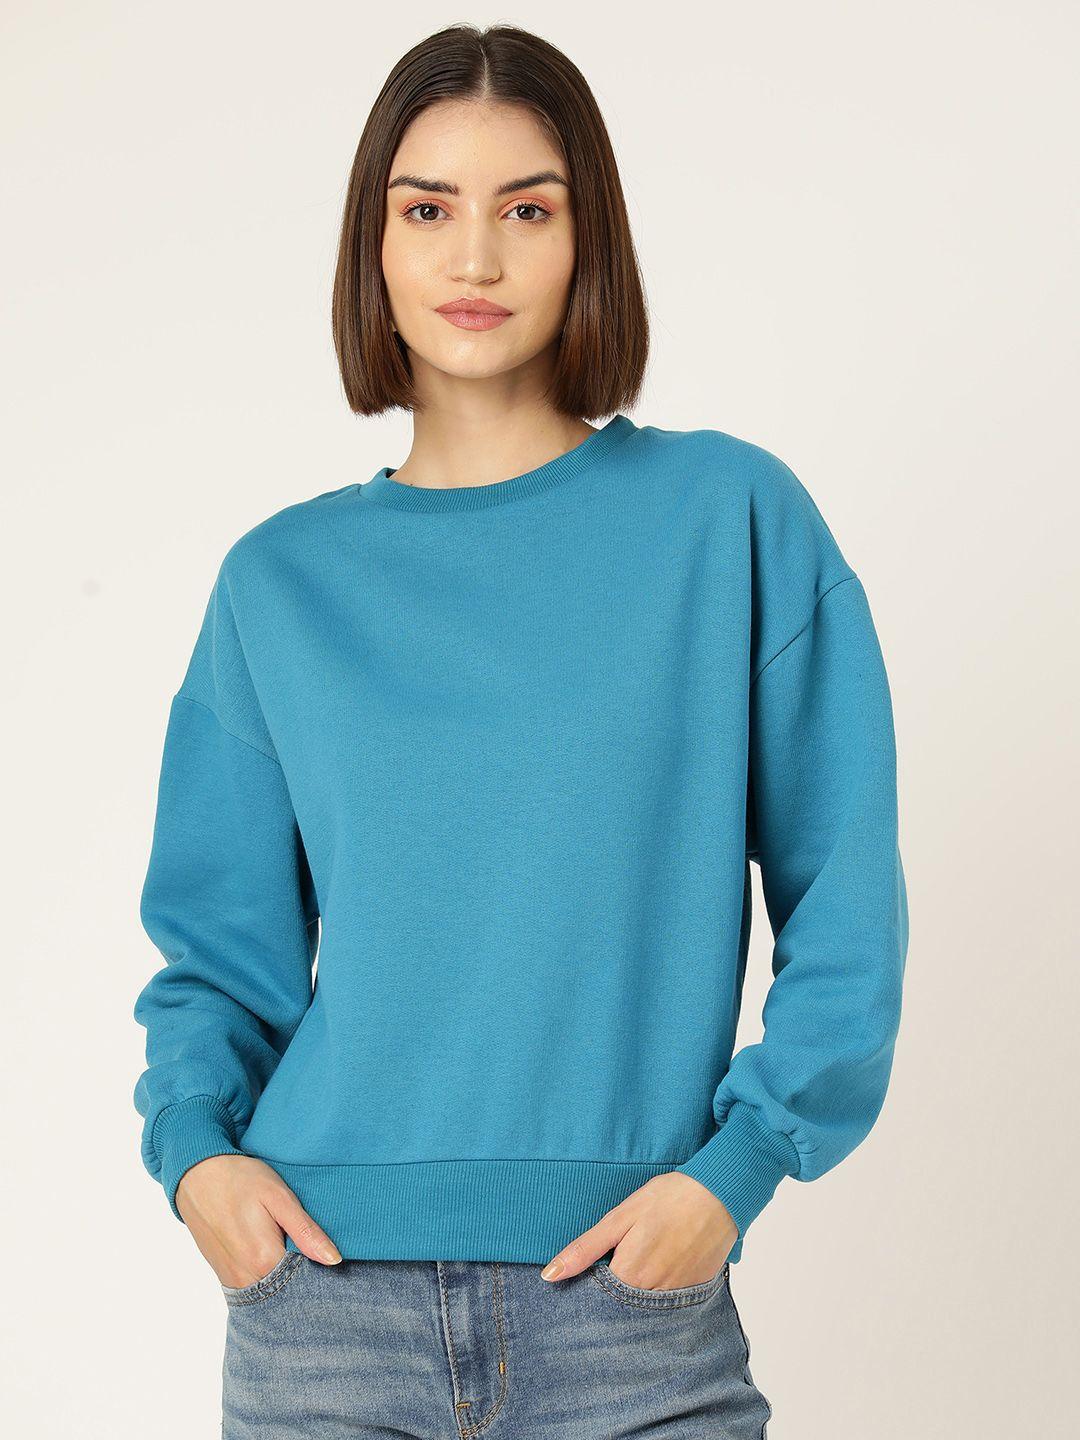 rue collection solid fleece sweatshirt